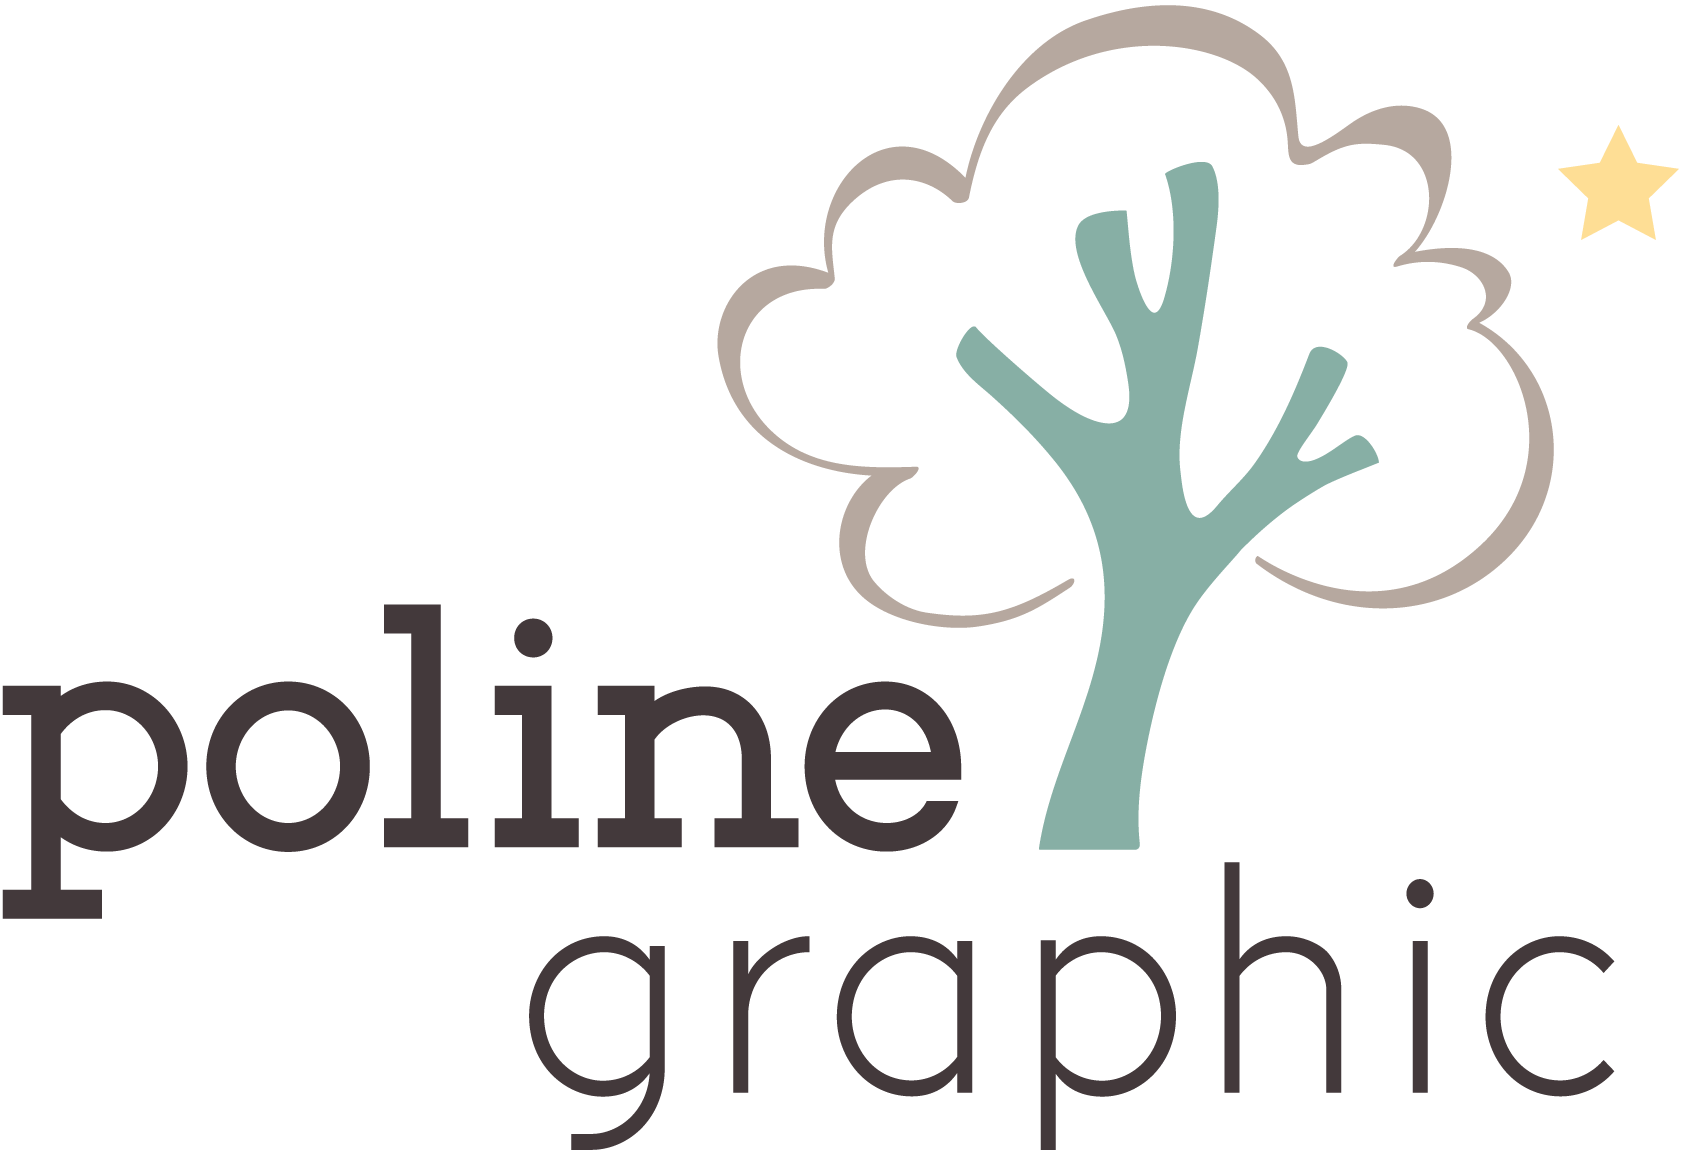 Big logo Poline Graphic